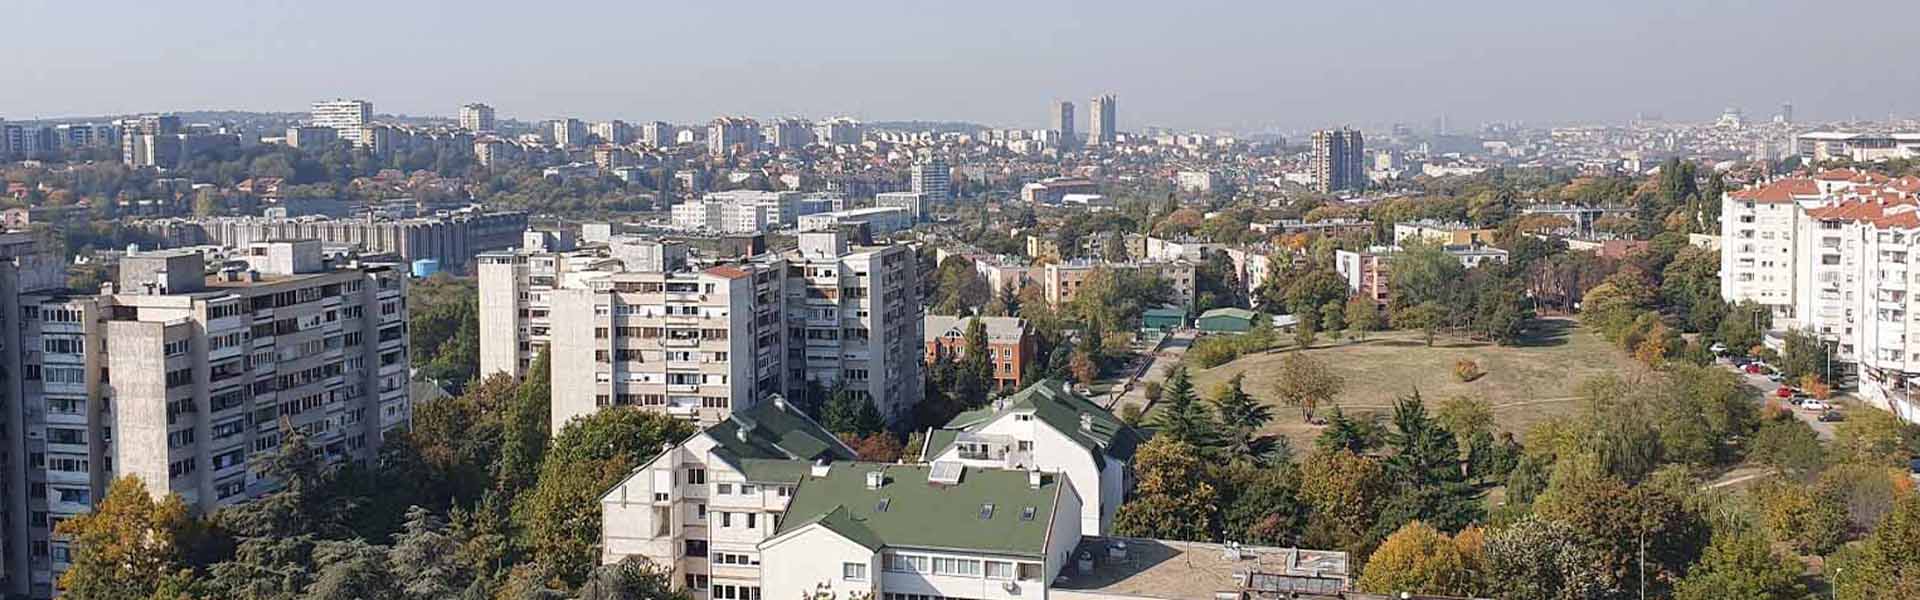 Rent a car Braće Jerković | Beograd, Srbija